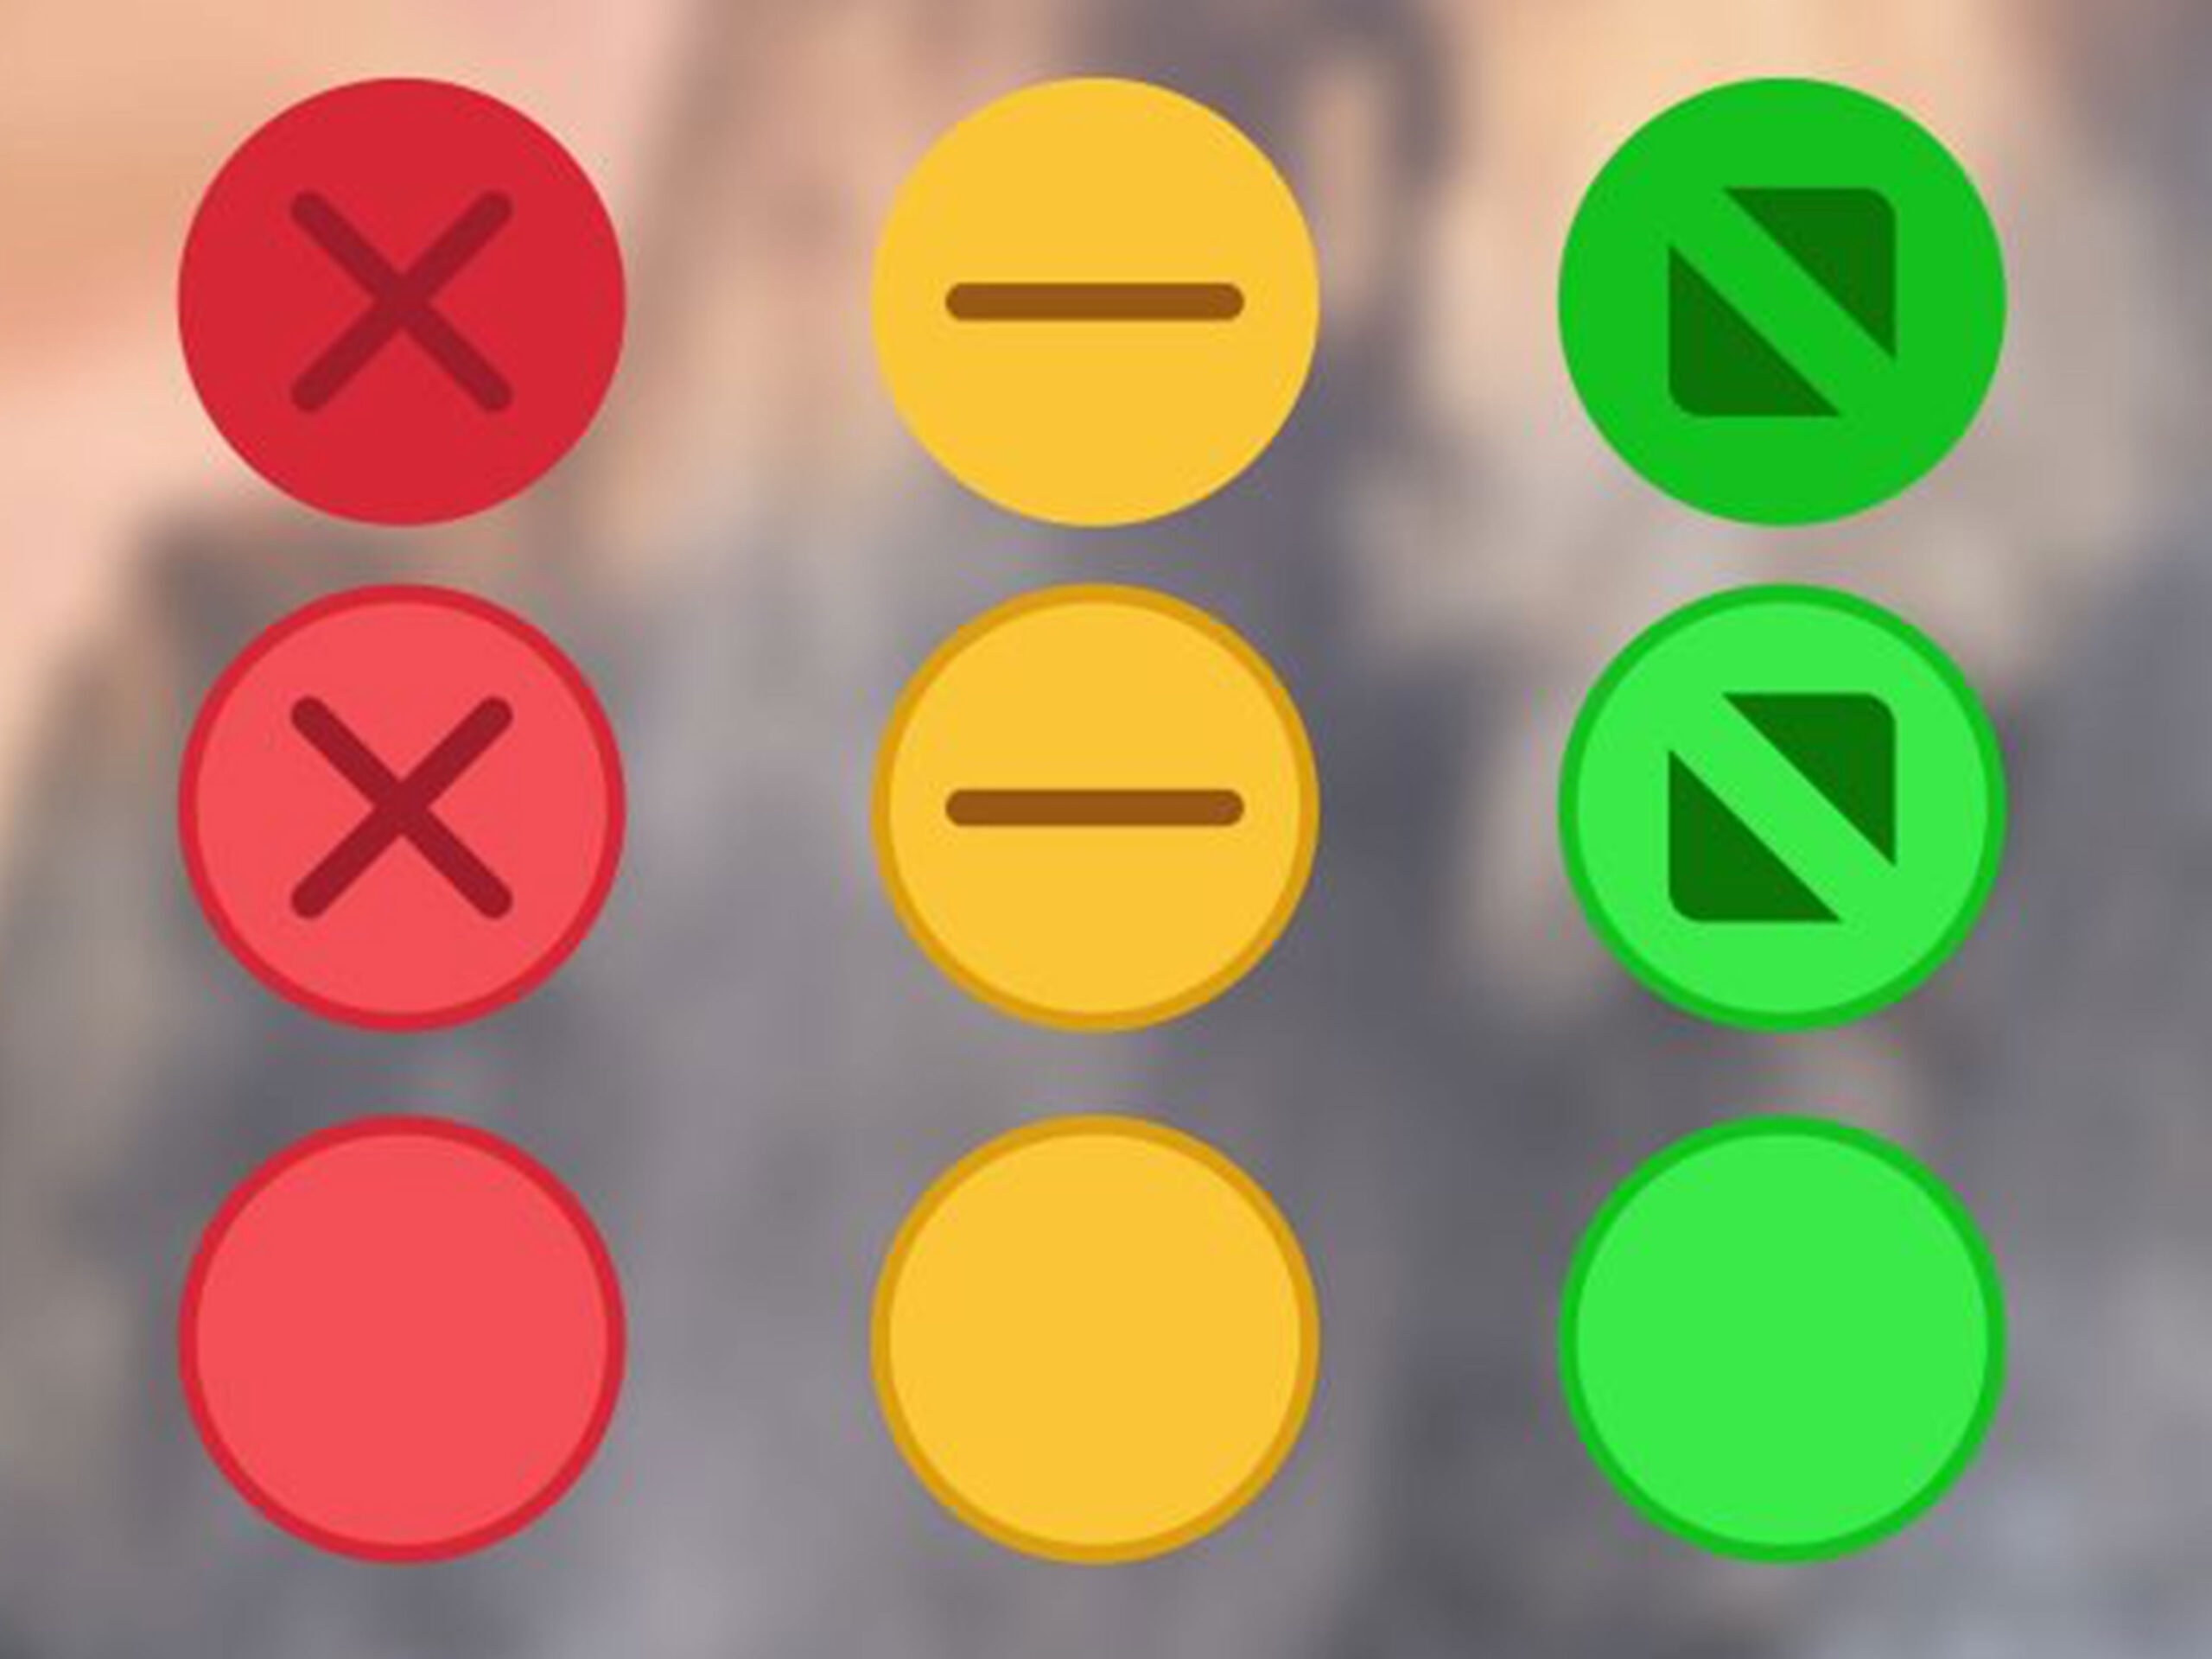 Using Red, Orange, Green Window Controls for Fullscreen Apps